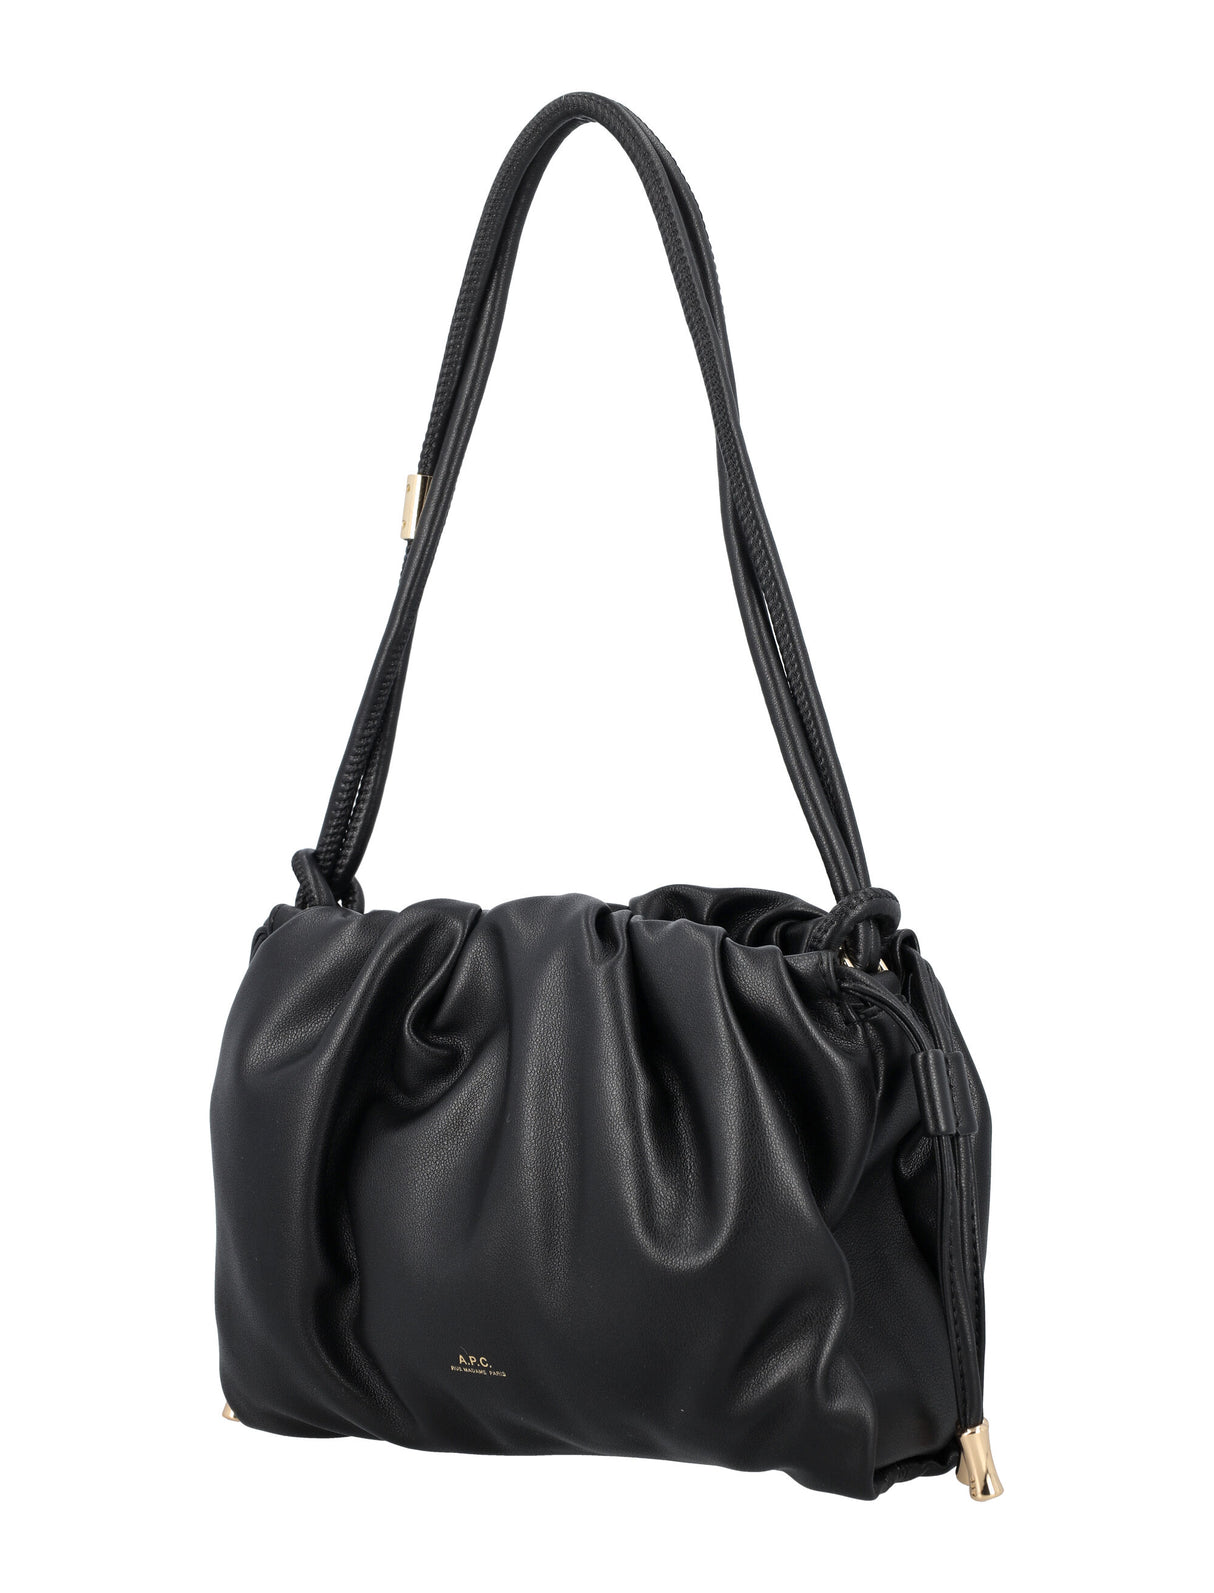 A.P.C. Sleek and Sophisticated Black Mini Handbag for Women